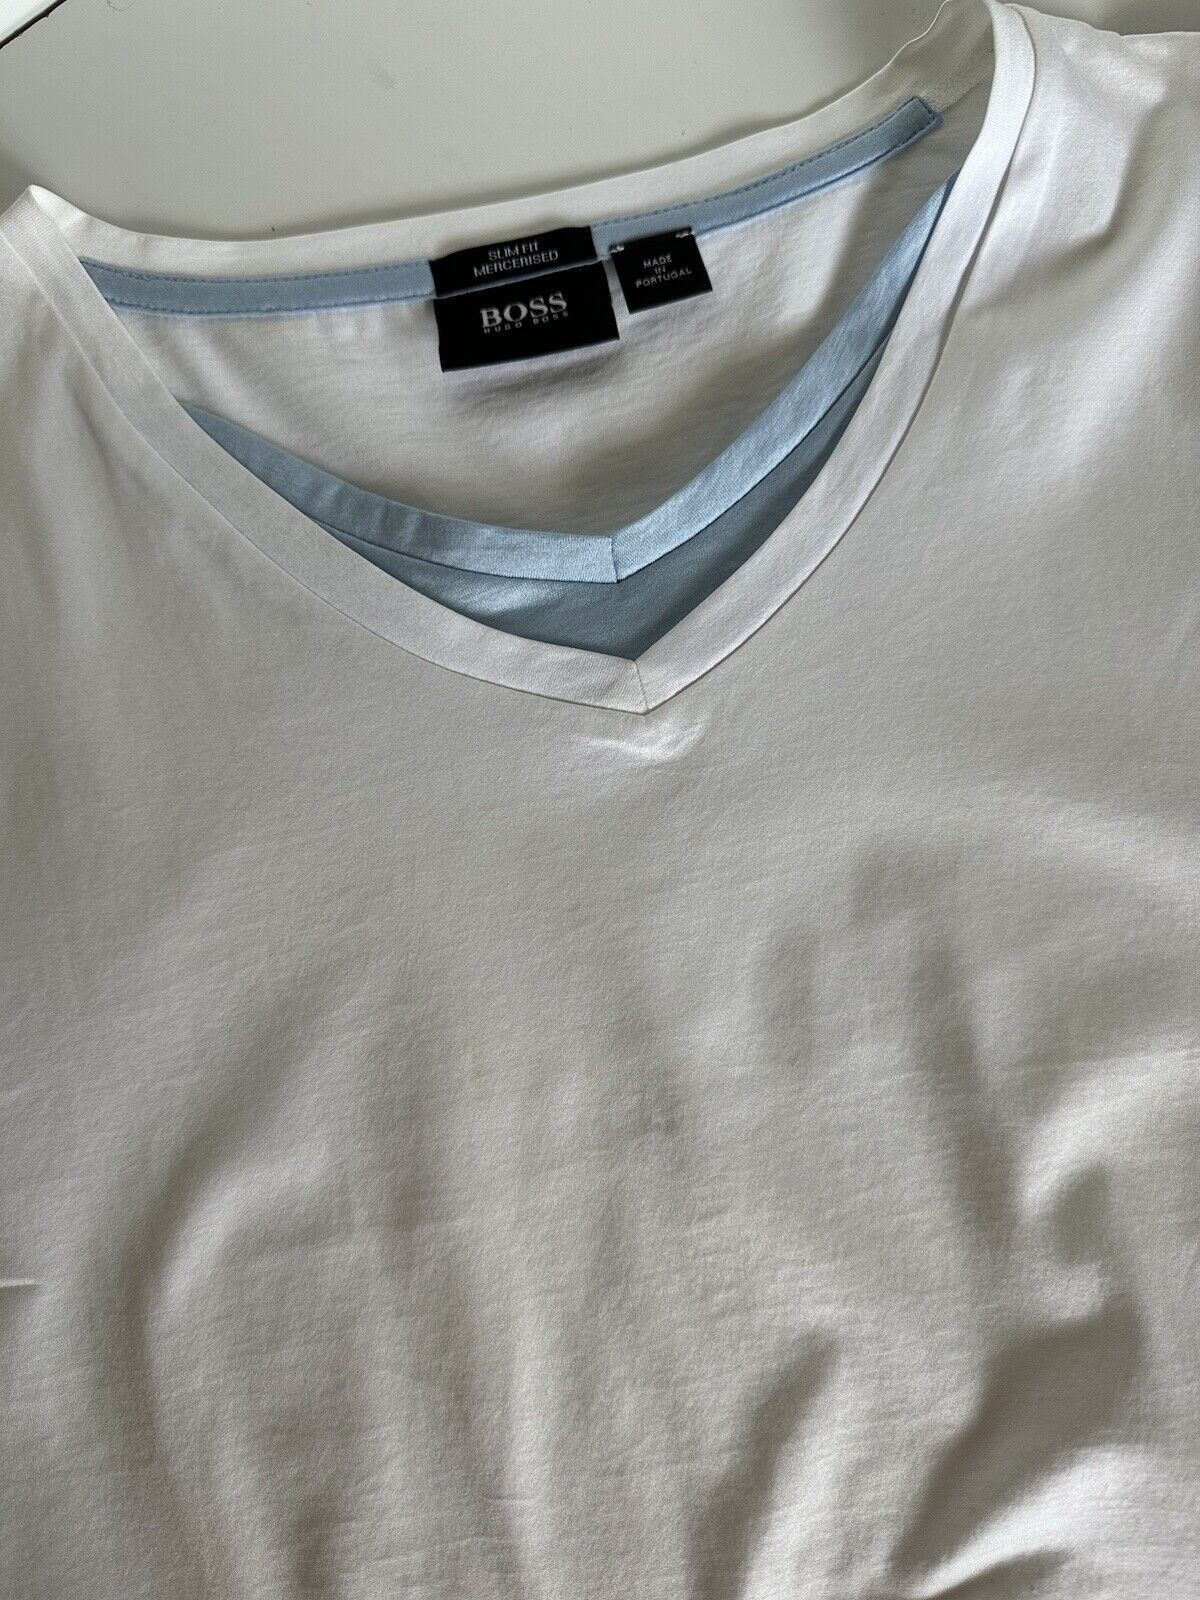 Boss Hugo Boss Black Label V-neck White Cotton T-shirt XL - Slim Fit